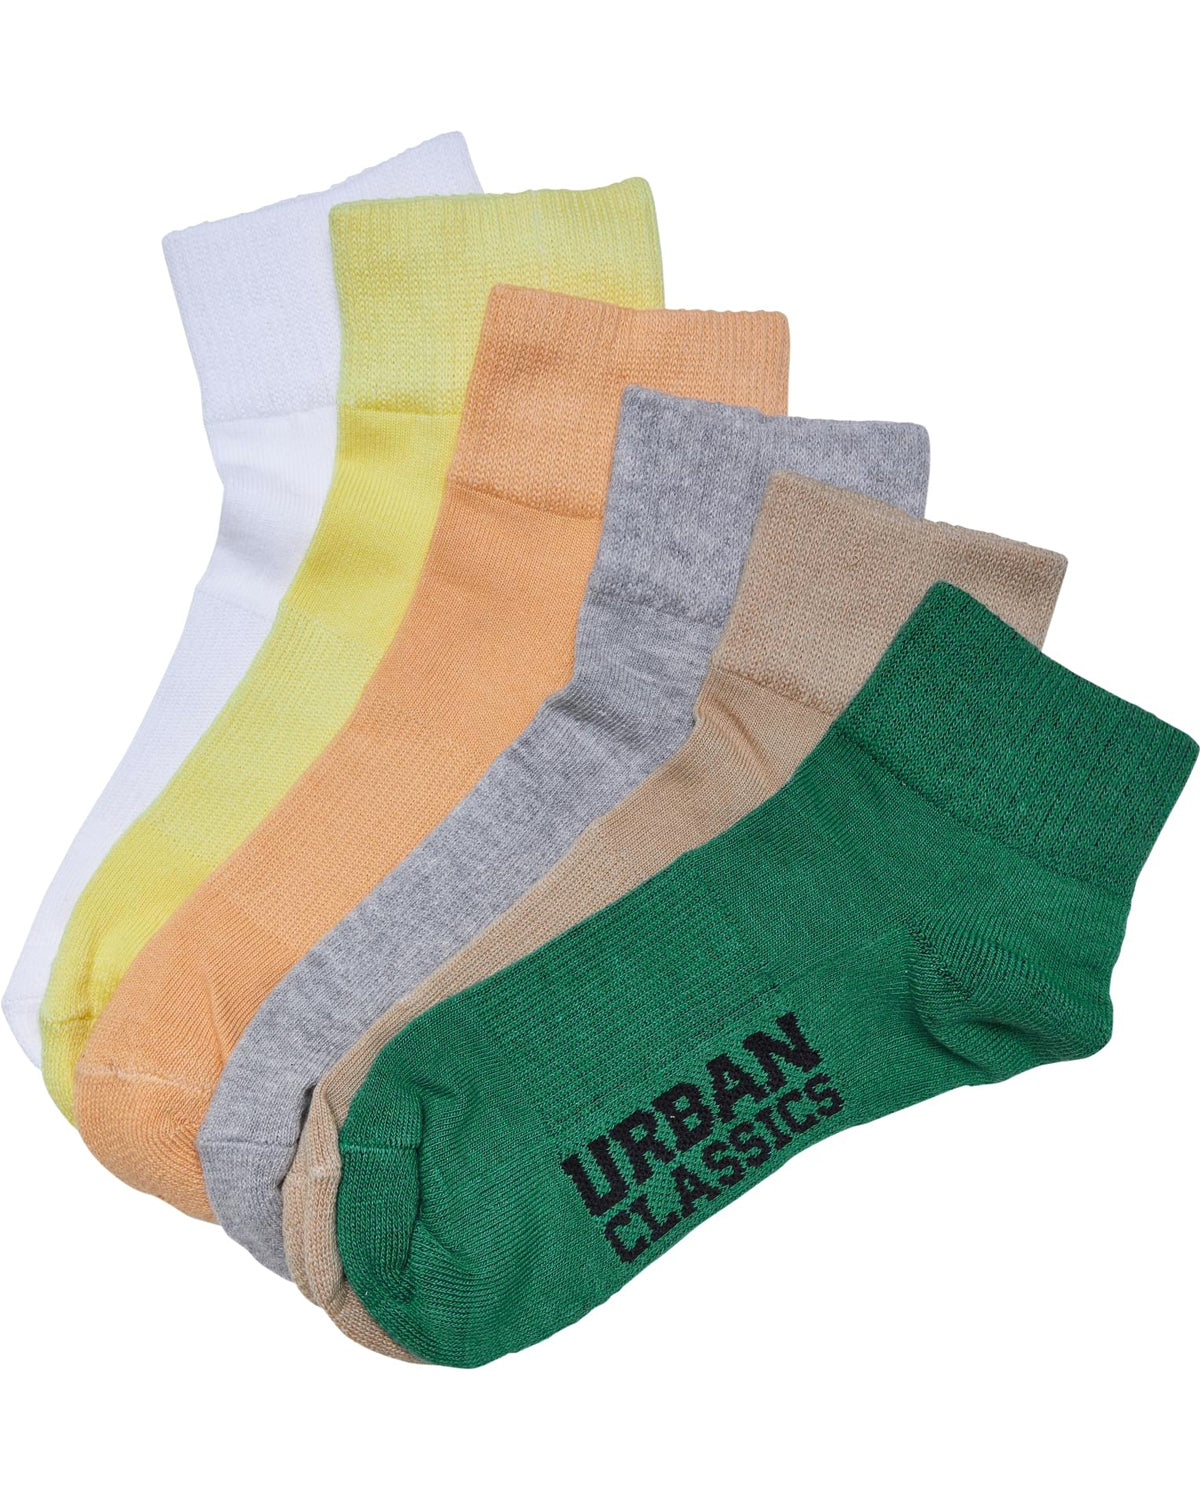 Urban Classics High sneaker sukat 6-pack - Sunsetcolor 47-50